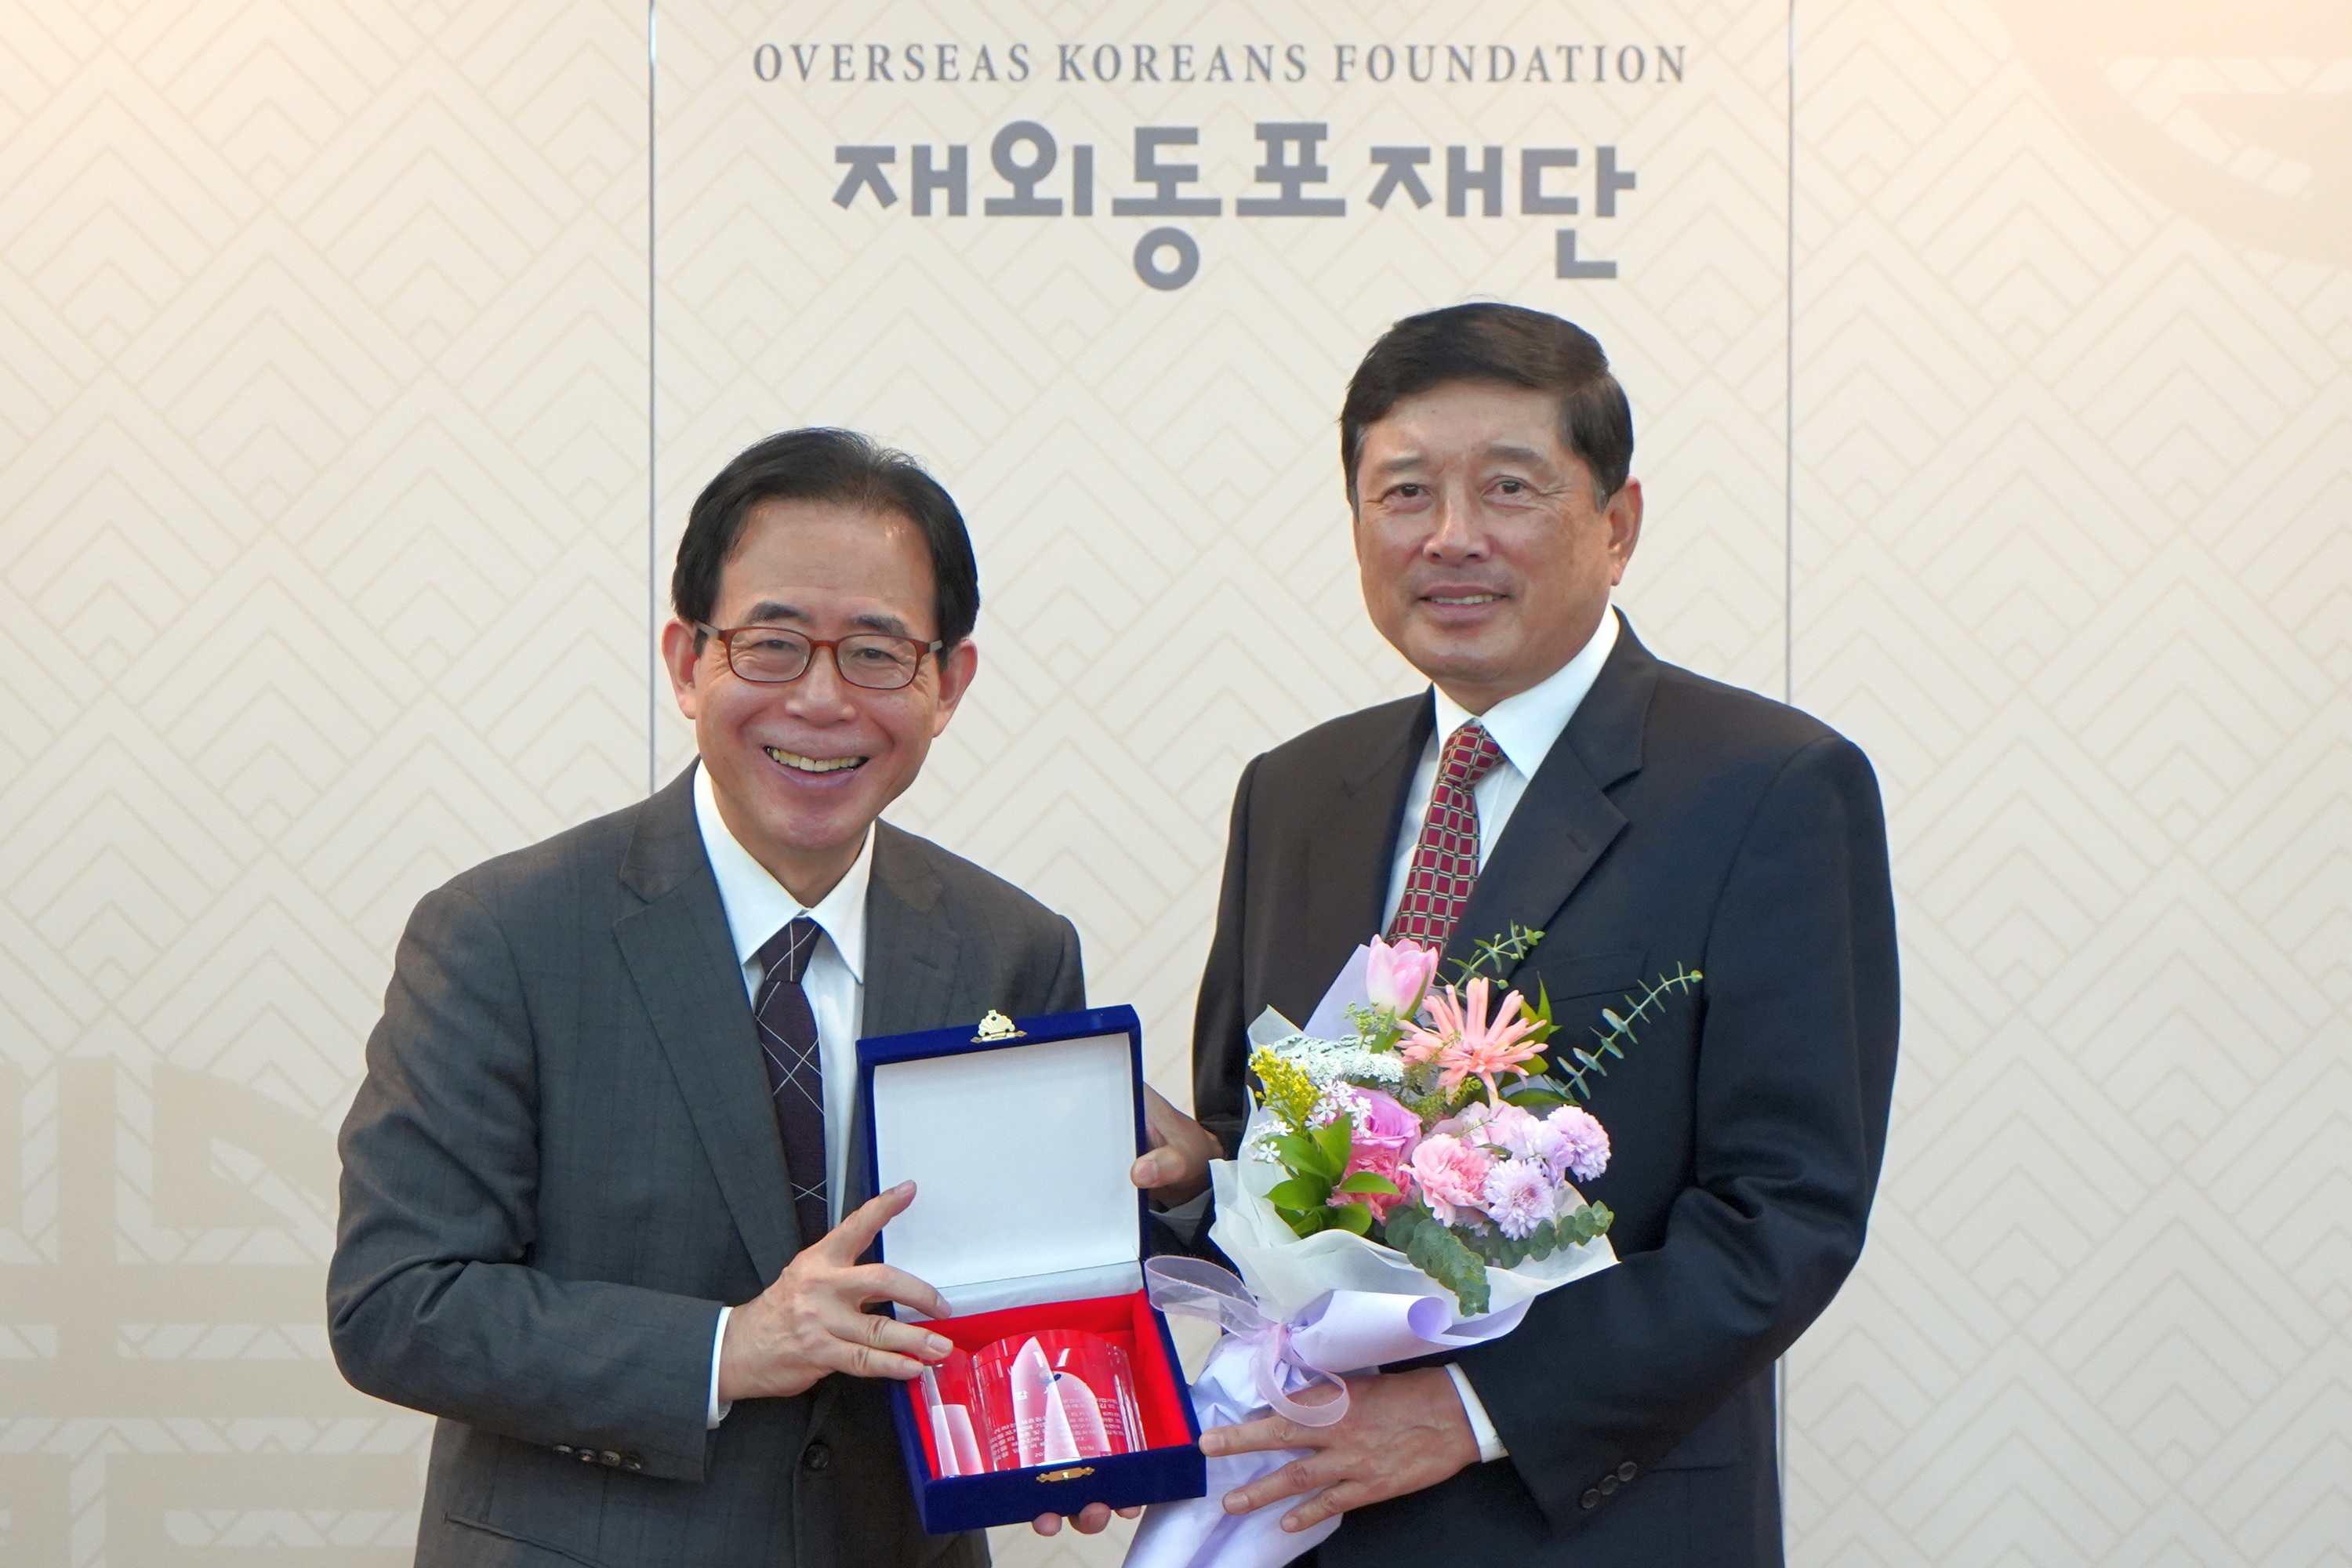 OKF Chairman Kim Sung-kon awarding the plaque of gratitude to Honorary President Kim Ui-jin